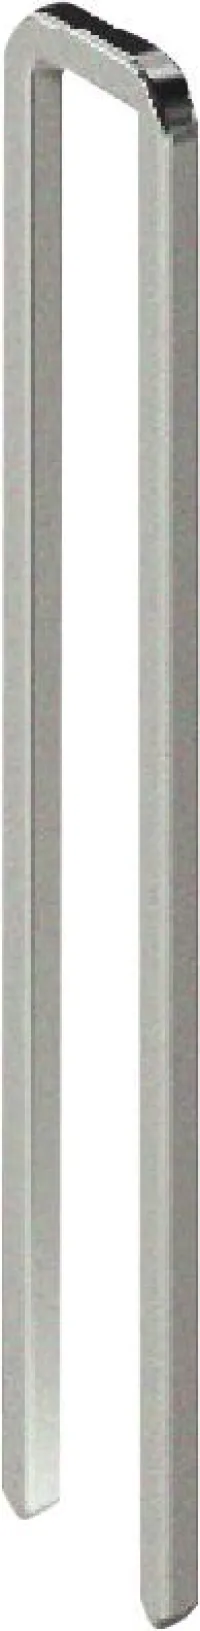 Clip spate îngust C tip 4/15 mm a 1100 St Novus